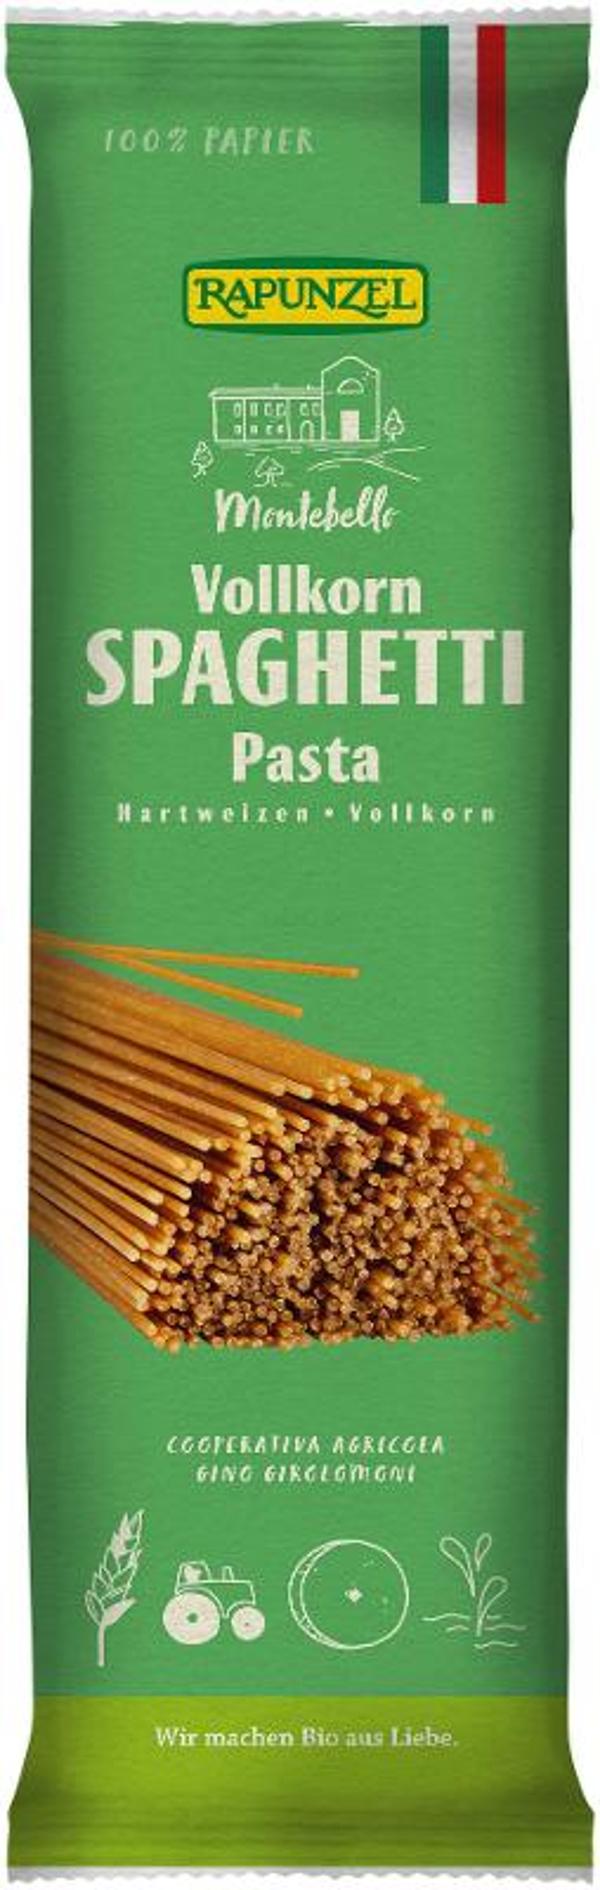 Produktfoto zu Spaghetti Vollkorn, 500 g